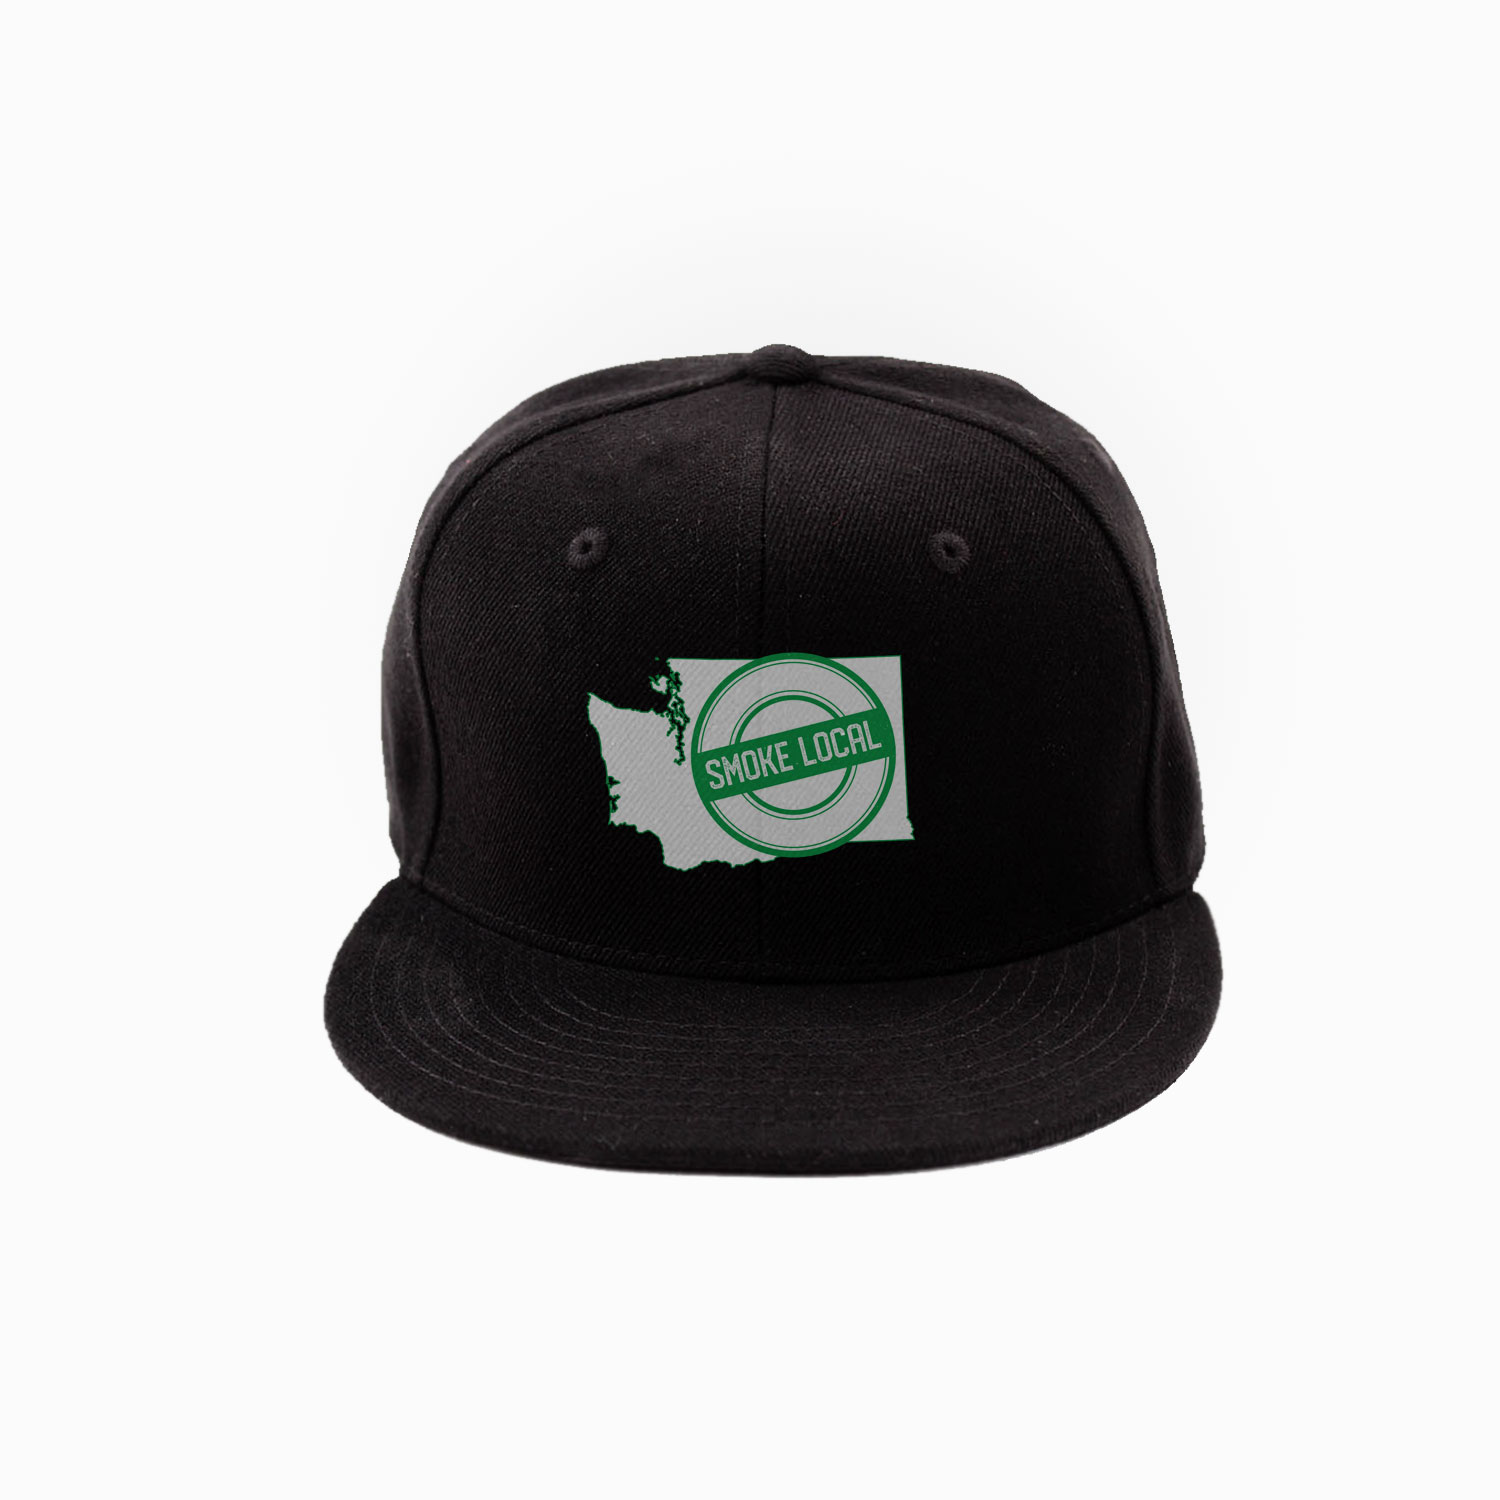 Smoke Local Baseball Hat +21 Recreational Cannabis Culture